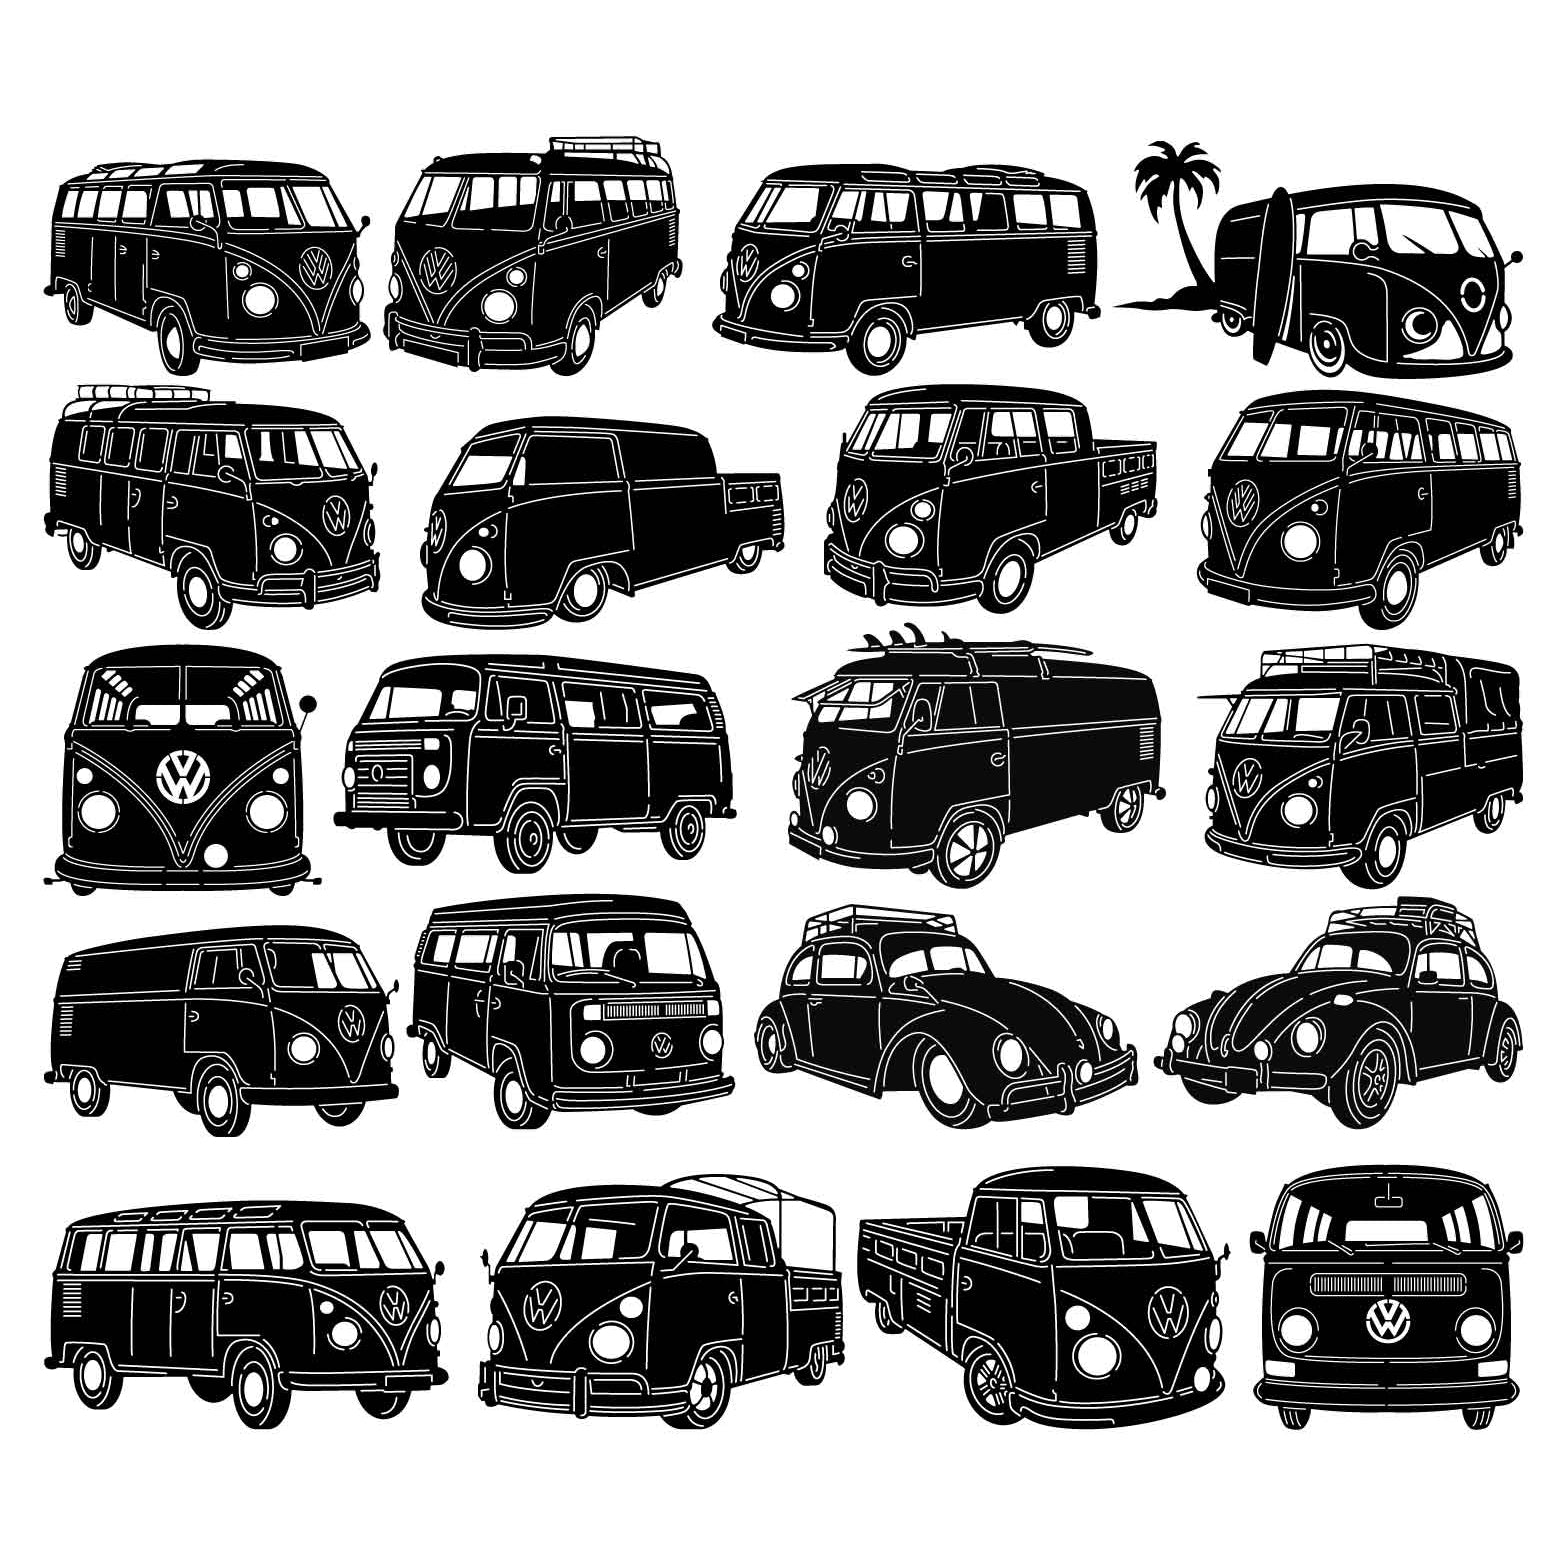 VW Kombi Vans and Cars-DXF files Cut Ready for CNC-DXFforCNC.com